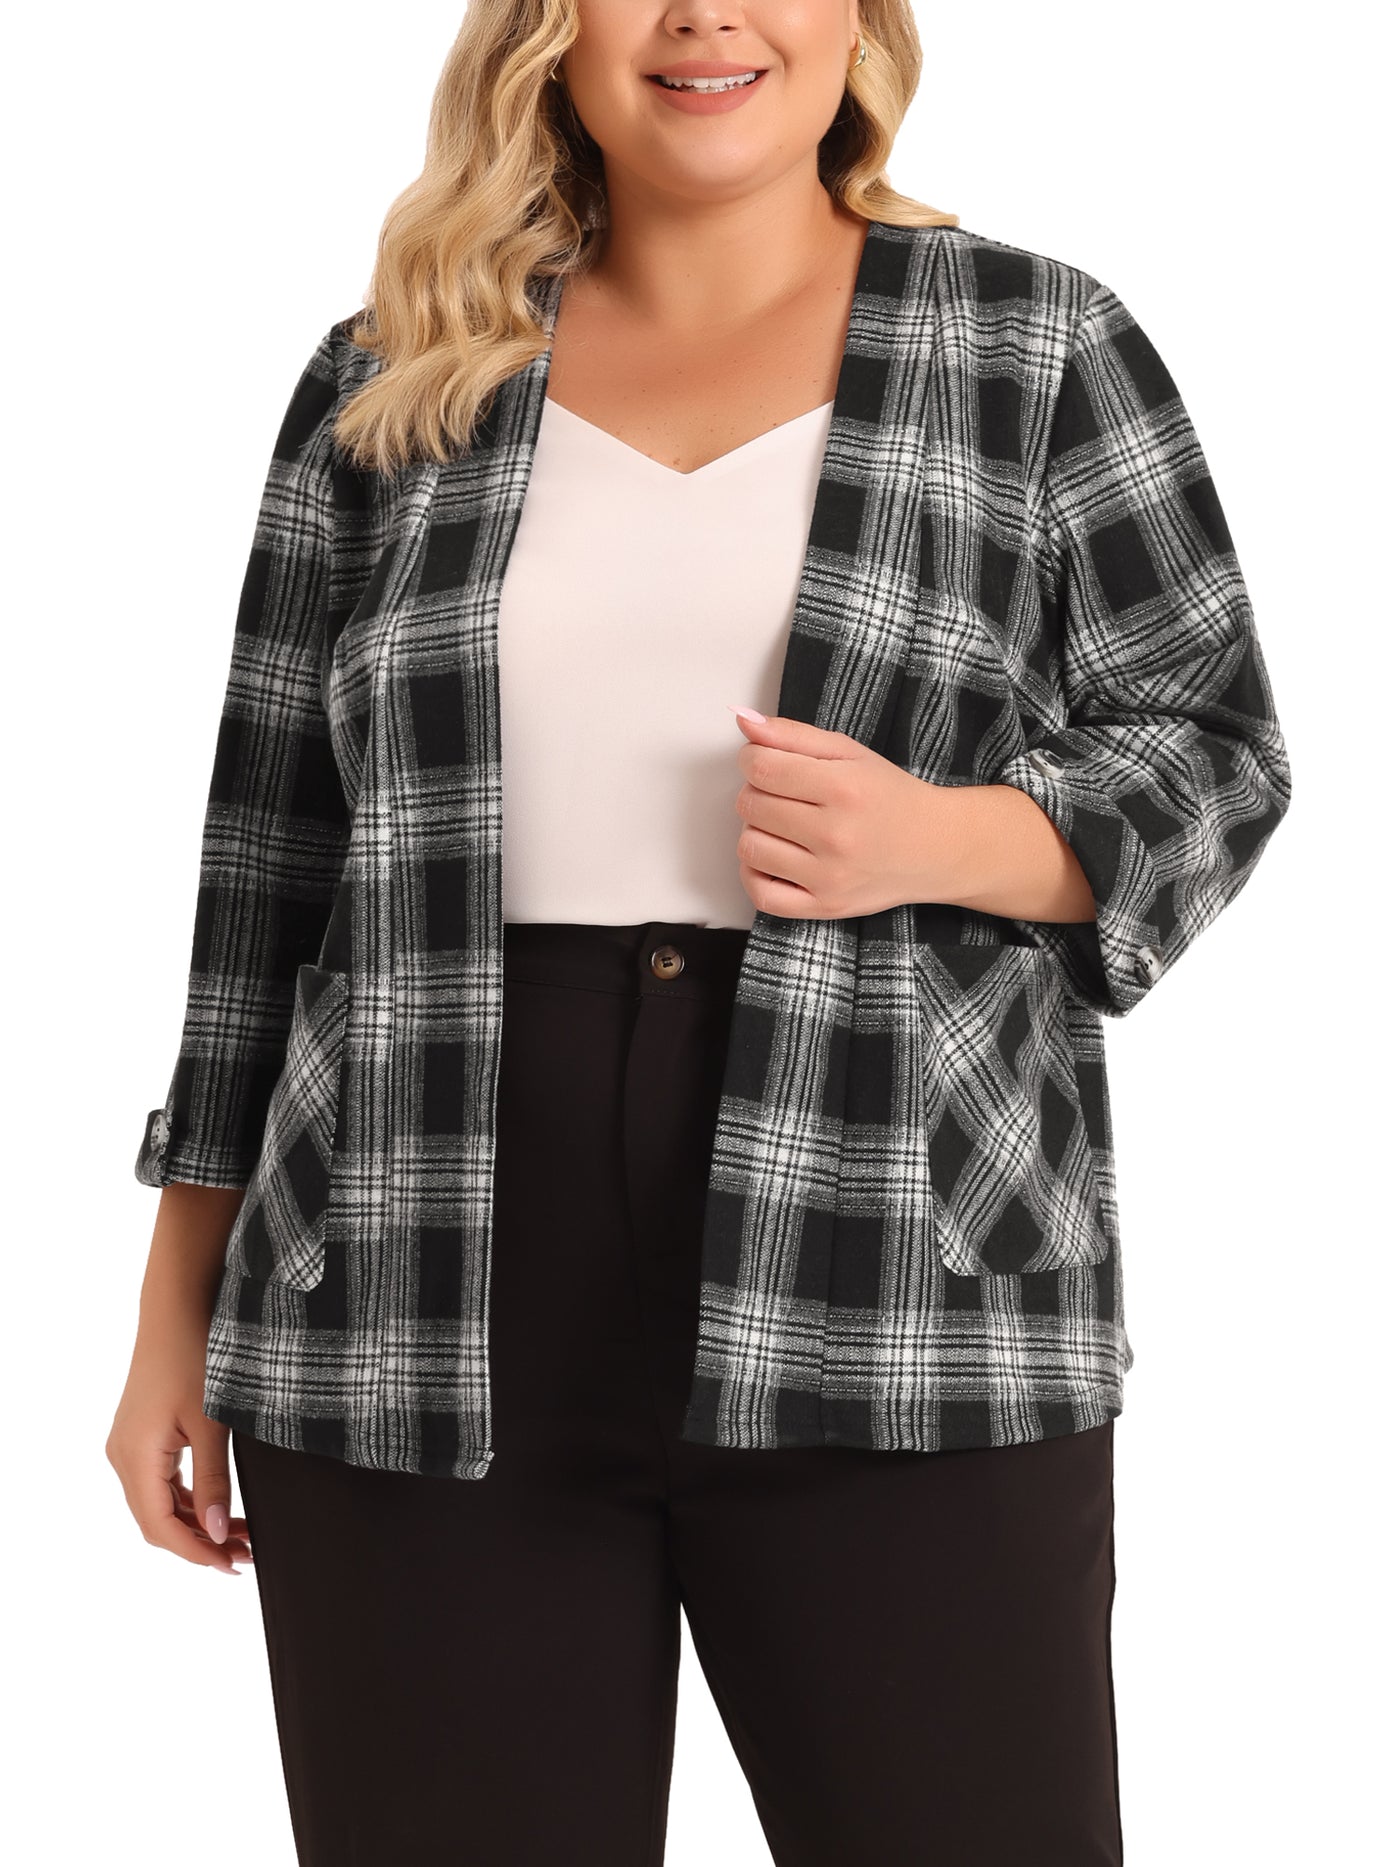 Bublédon Plus Size Blazer for Women Plaid Jacket Suits 3/4 Sleeves Work Office Blazers